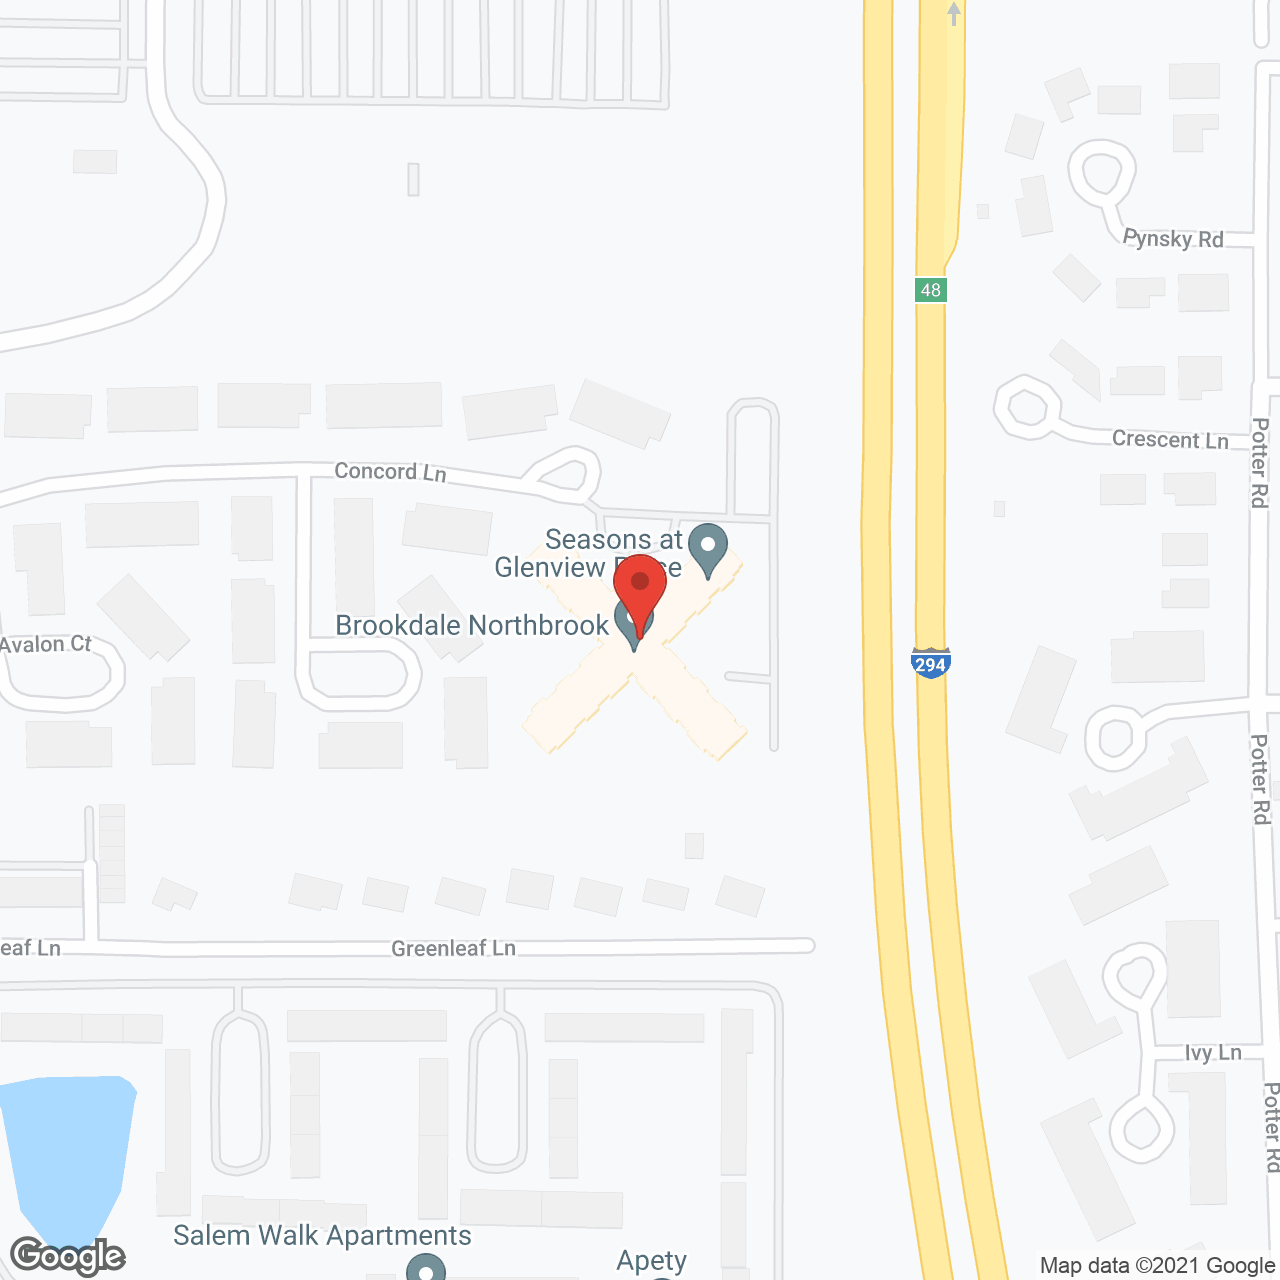 Brookdale Northbrook in google map